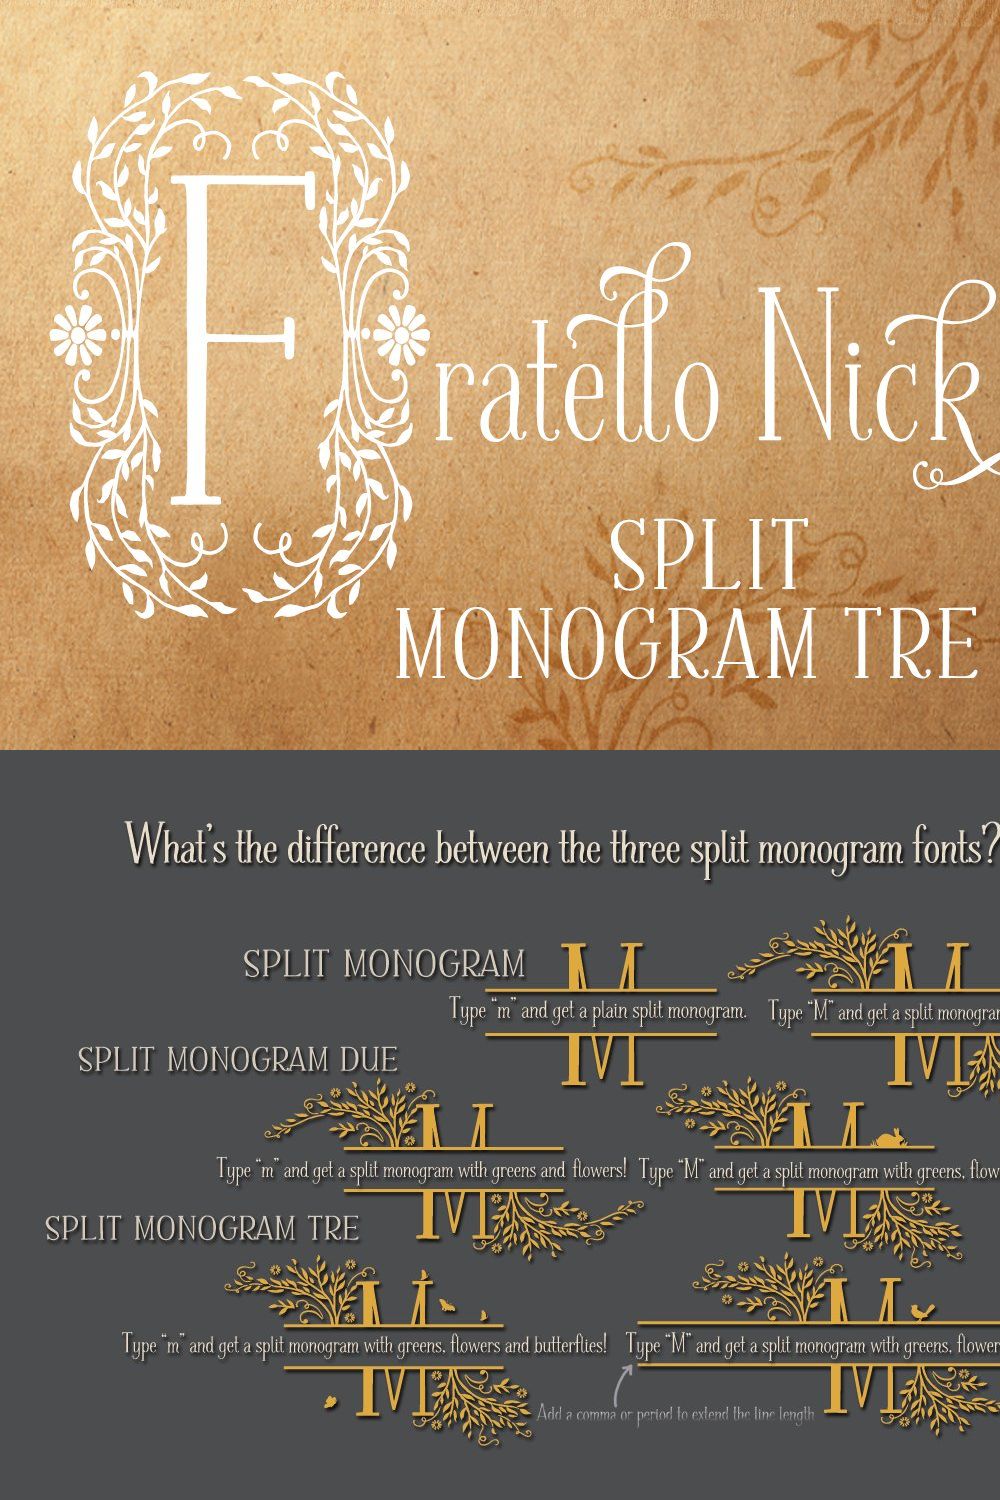 Sale-Fratello Nick Split Monogram 3 pinterest preview image.